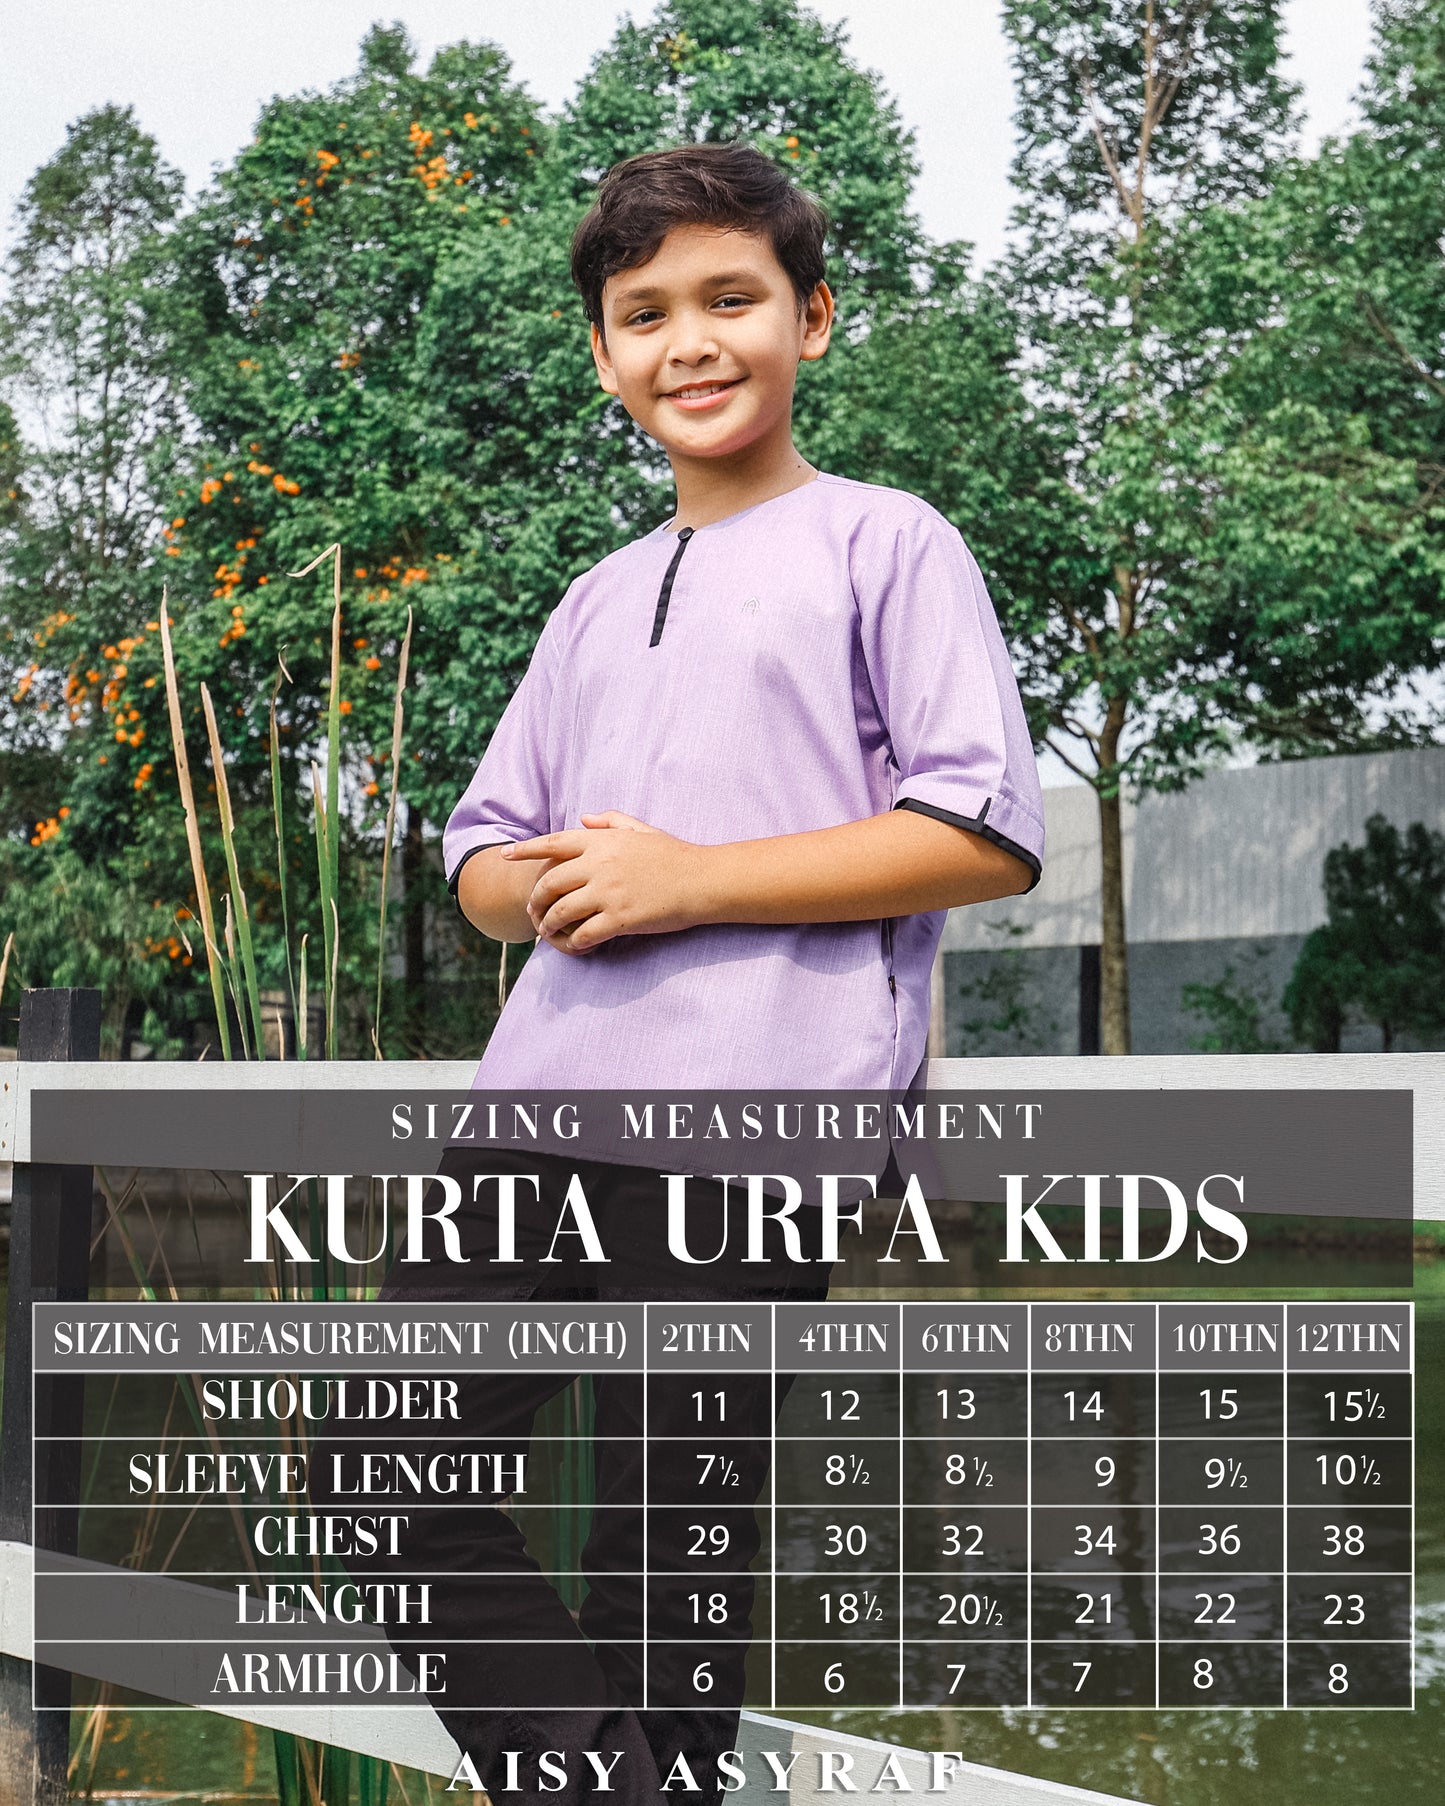 Kurta Urfa Kids - Emerald Green